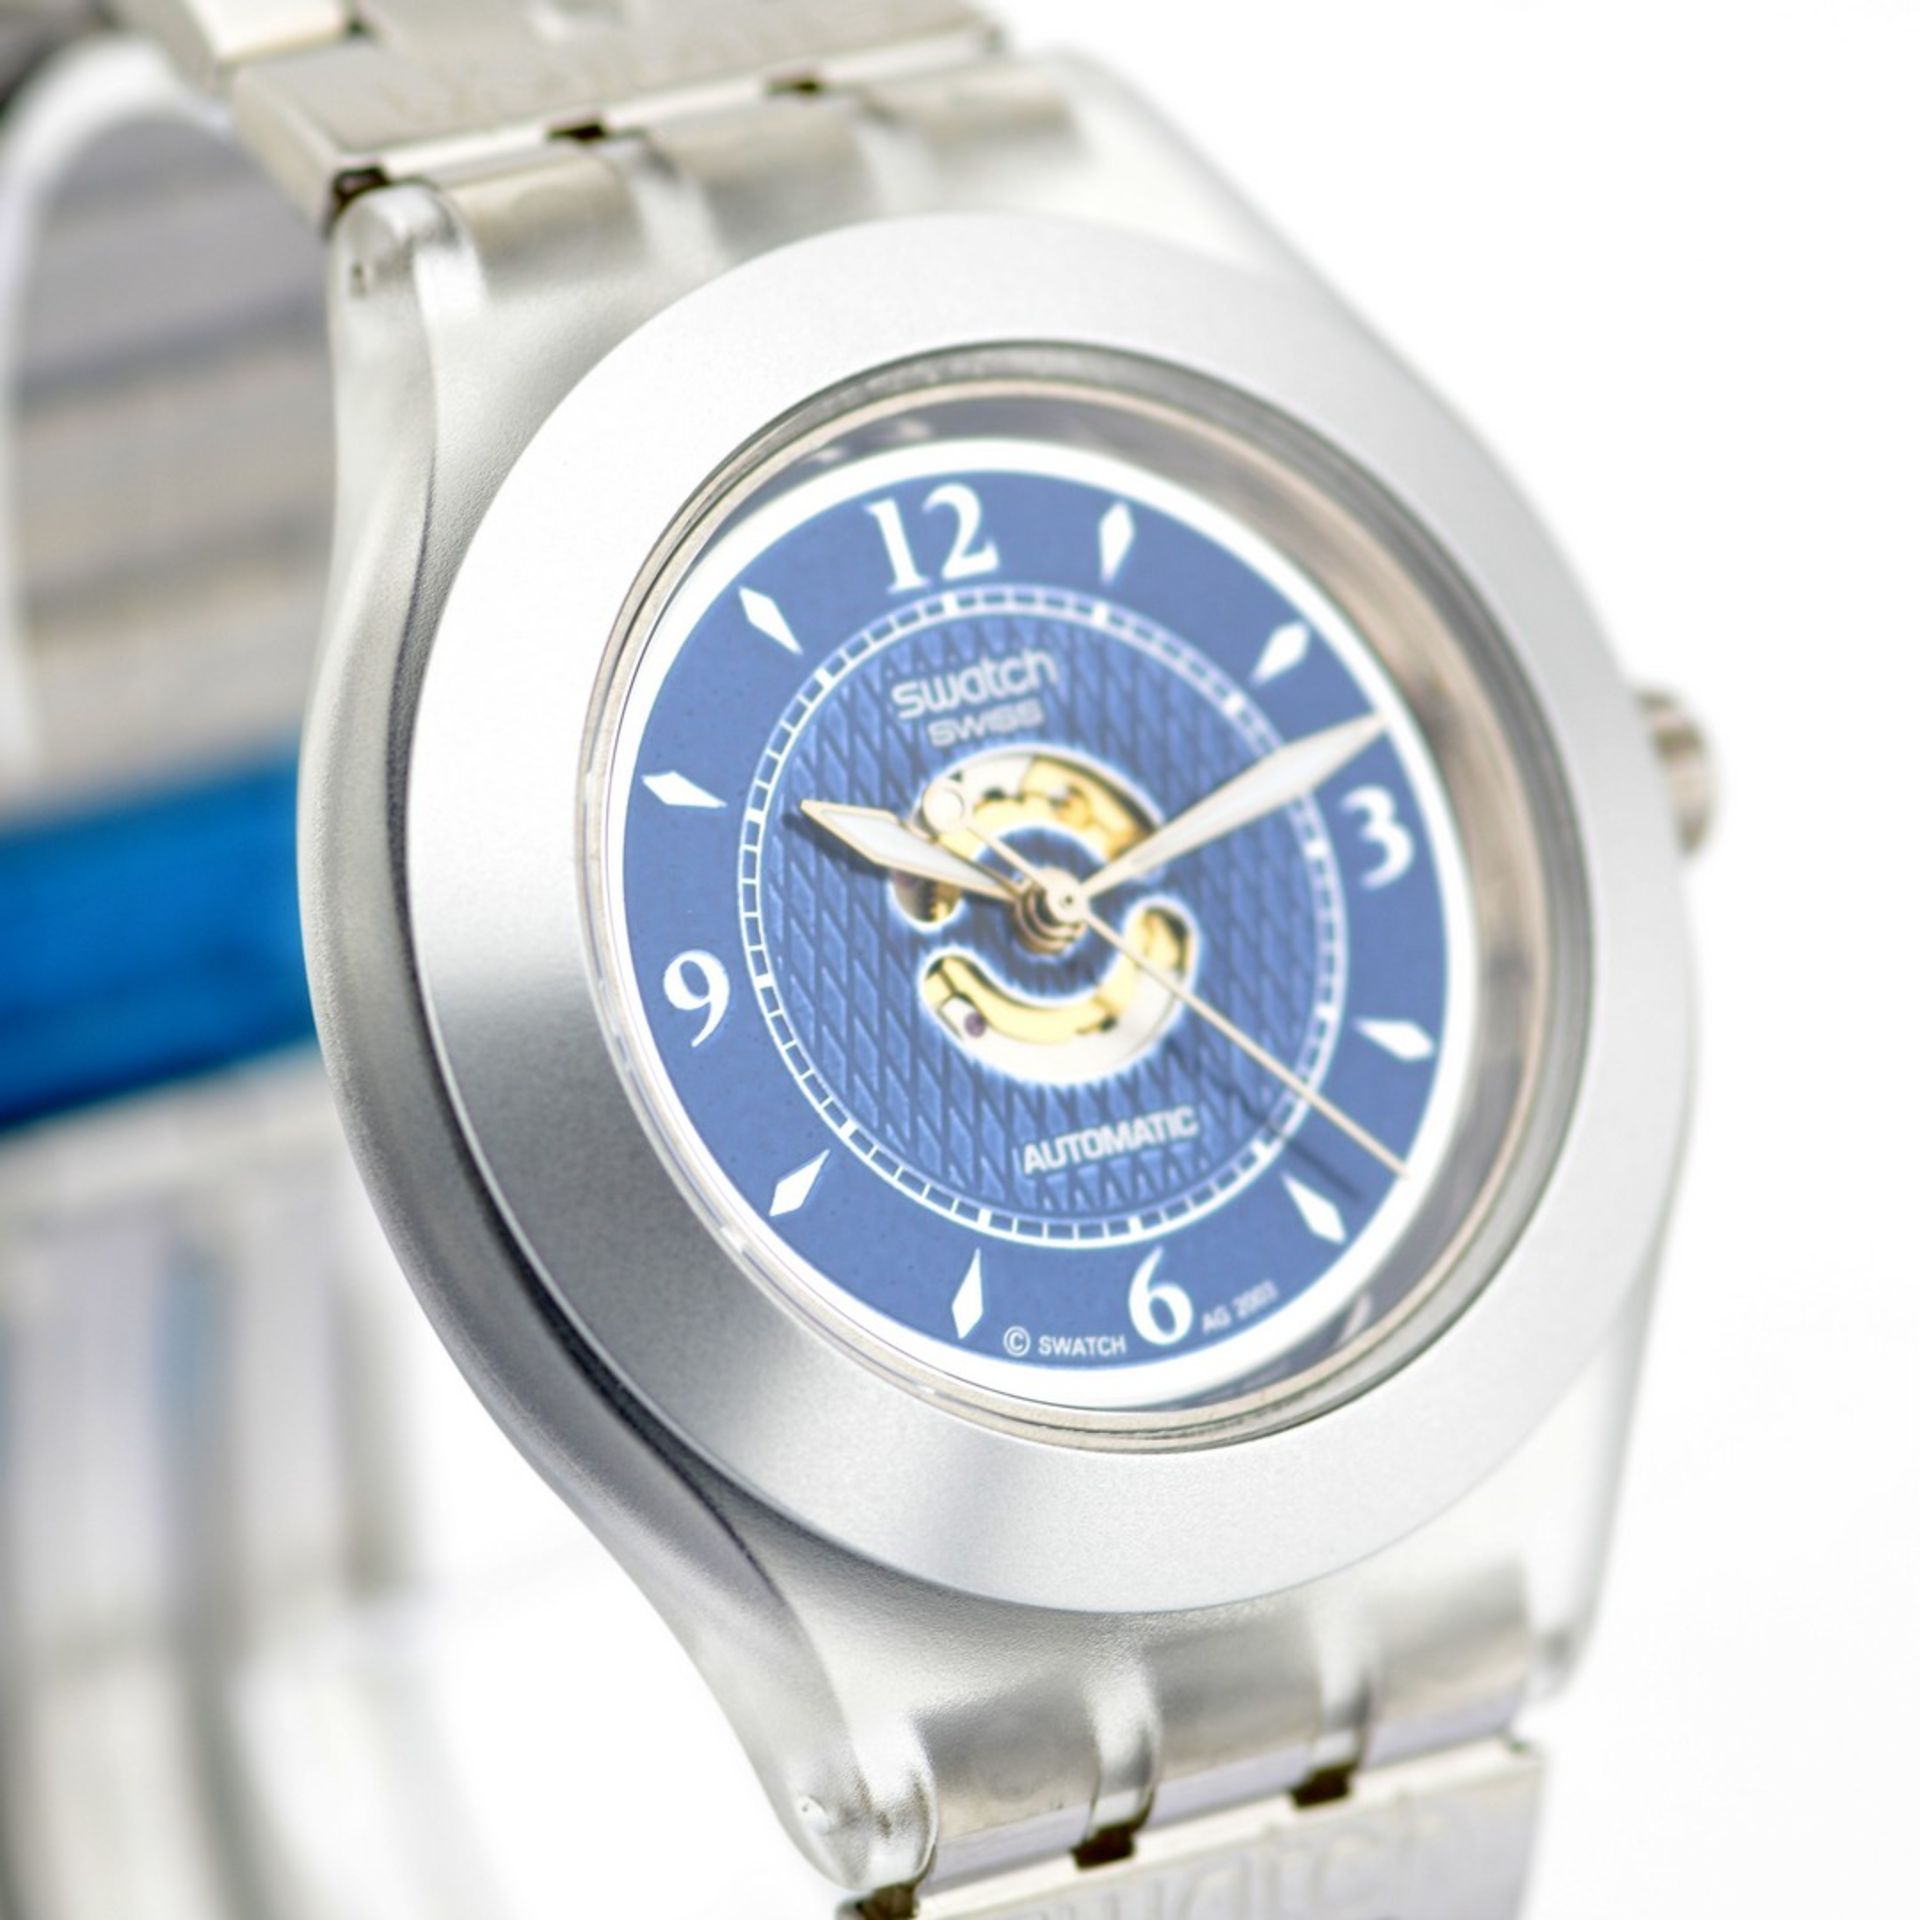 Swatch / Diaphane Irony Automatic - (Unworn) Unisex Steel Wrist Watch - Image 5 of 8